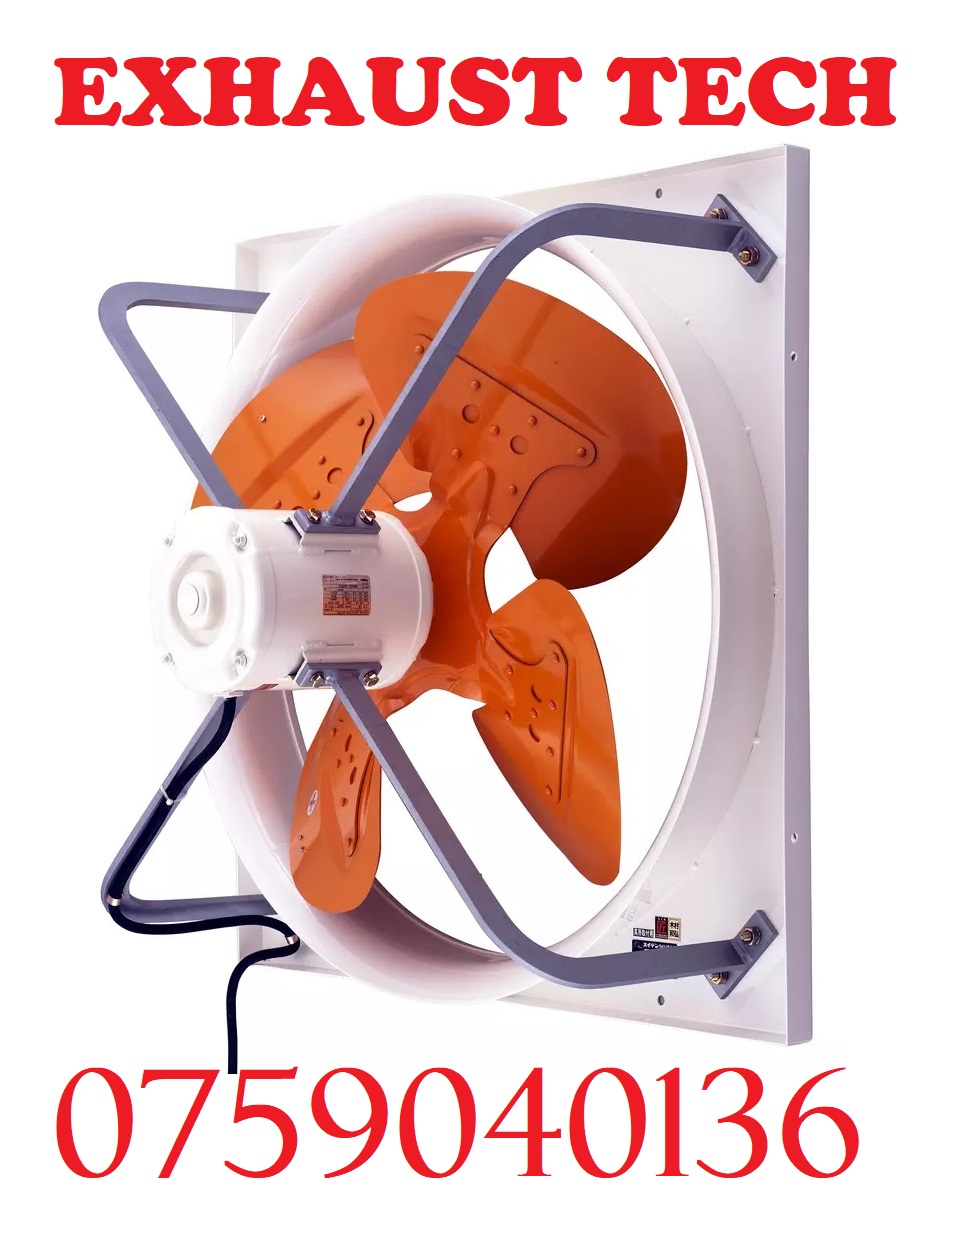 Industrial Exhaust fans suppliers in srilanka ,turbine ventilators , air ventilation fans suppliers srilanka, ventilation solution providers srilanka, exhaust fans for factories, warehouses